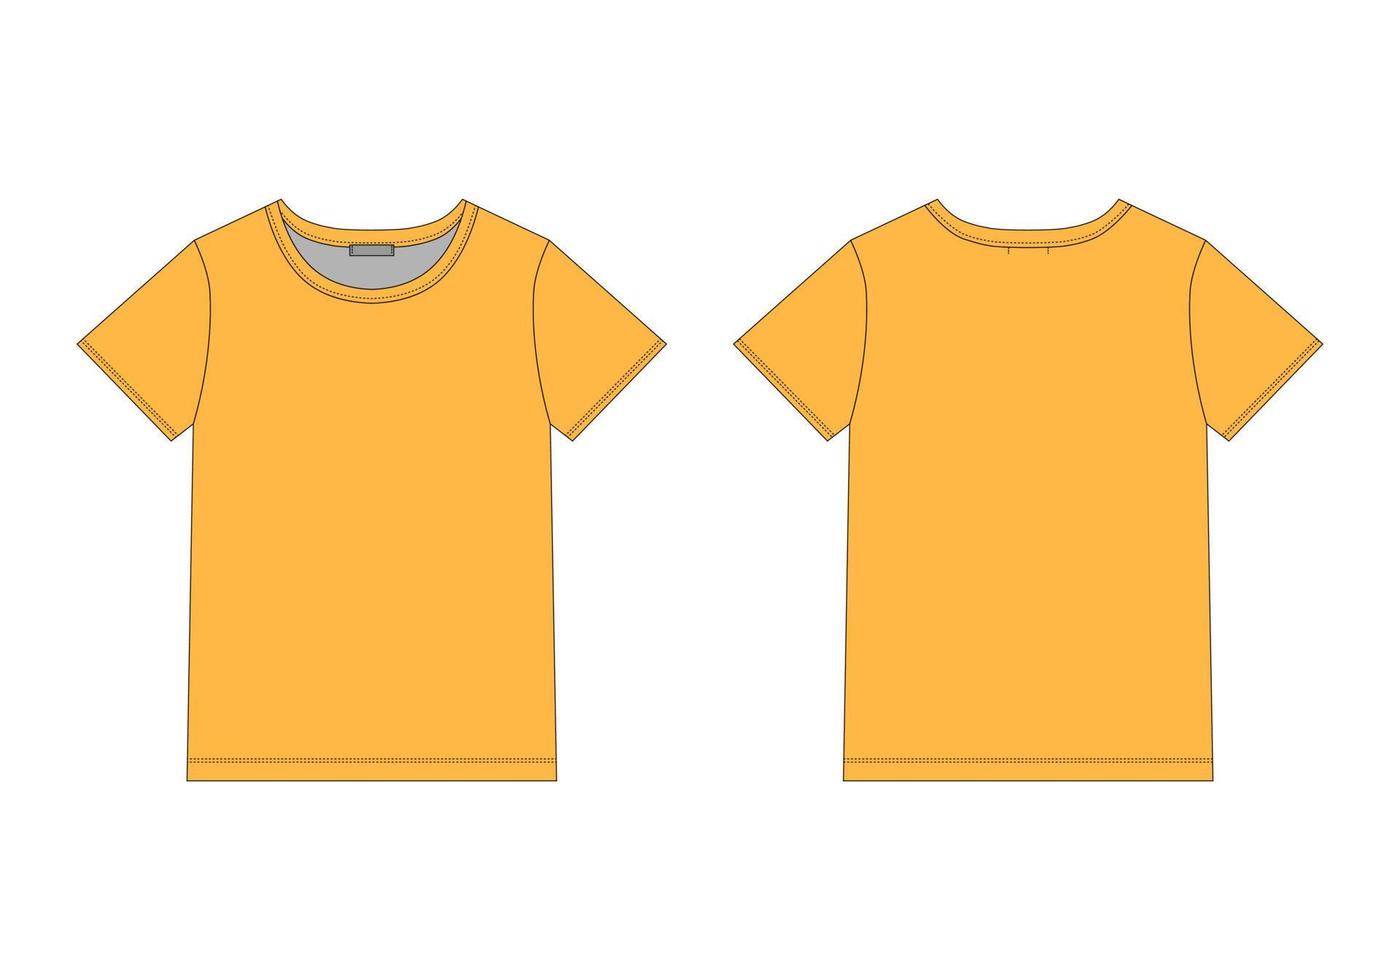 Technical Sketch Unisex-T-Shirt in orangen Farben. T-Shirt-Vektor-Illustration. vektor